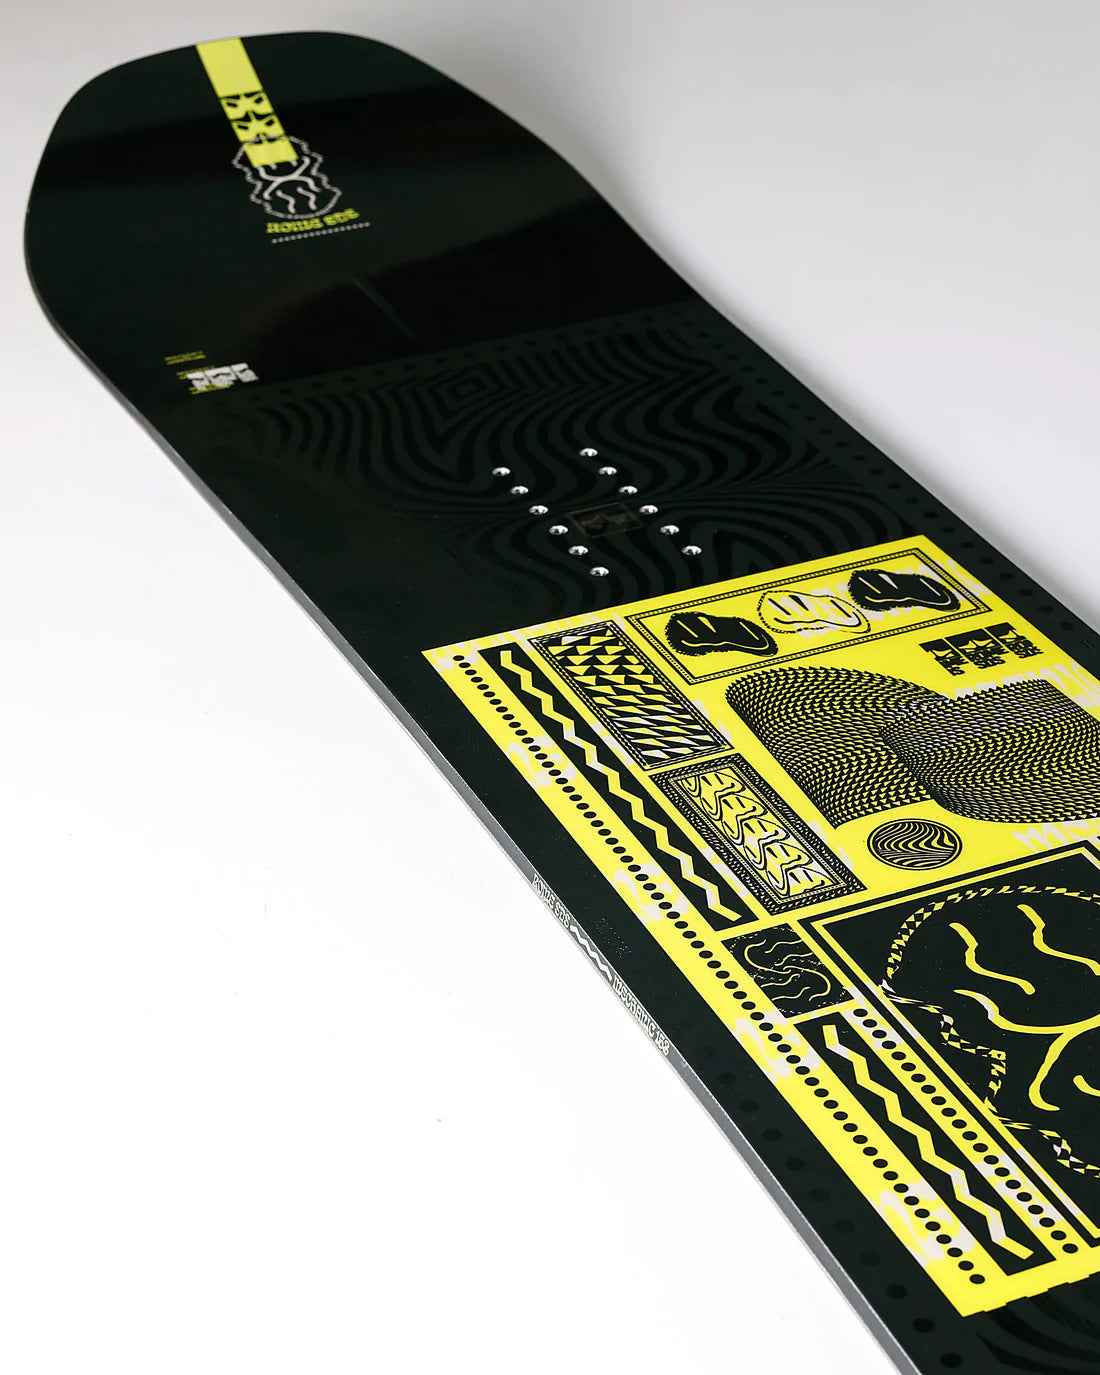 Rome Mechanic Snowboard. Black with yellow design, Rome Logo on top design